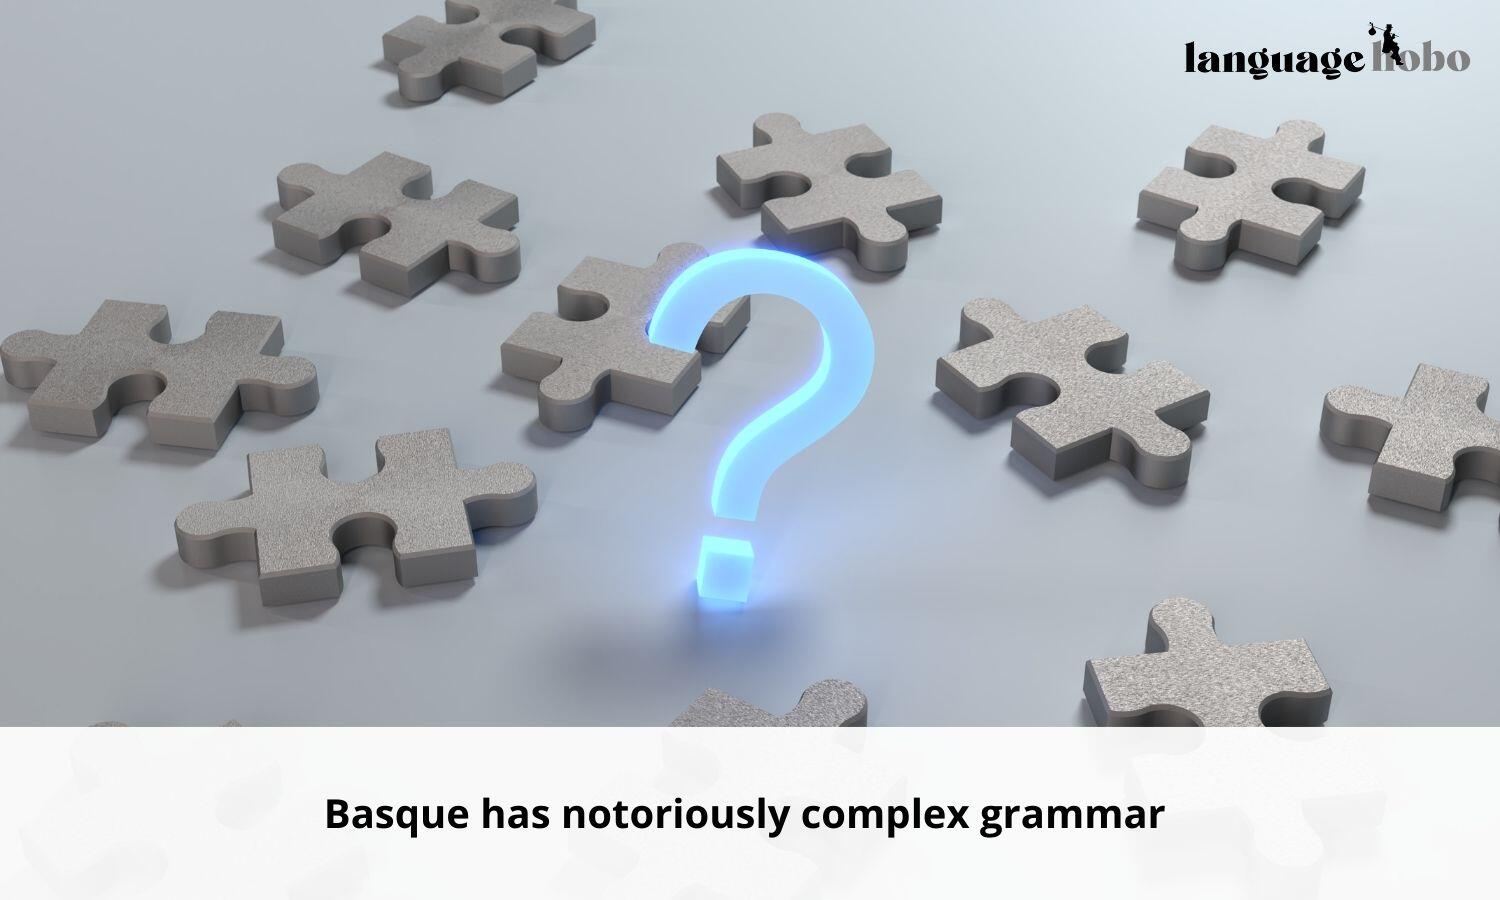 Basque has complex grammar